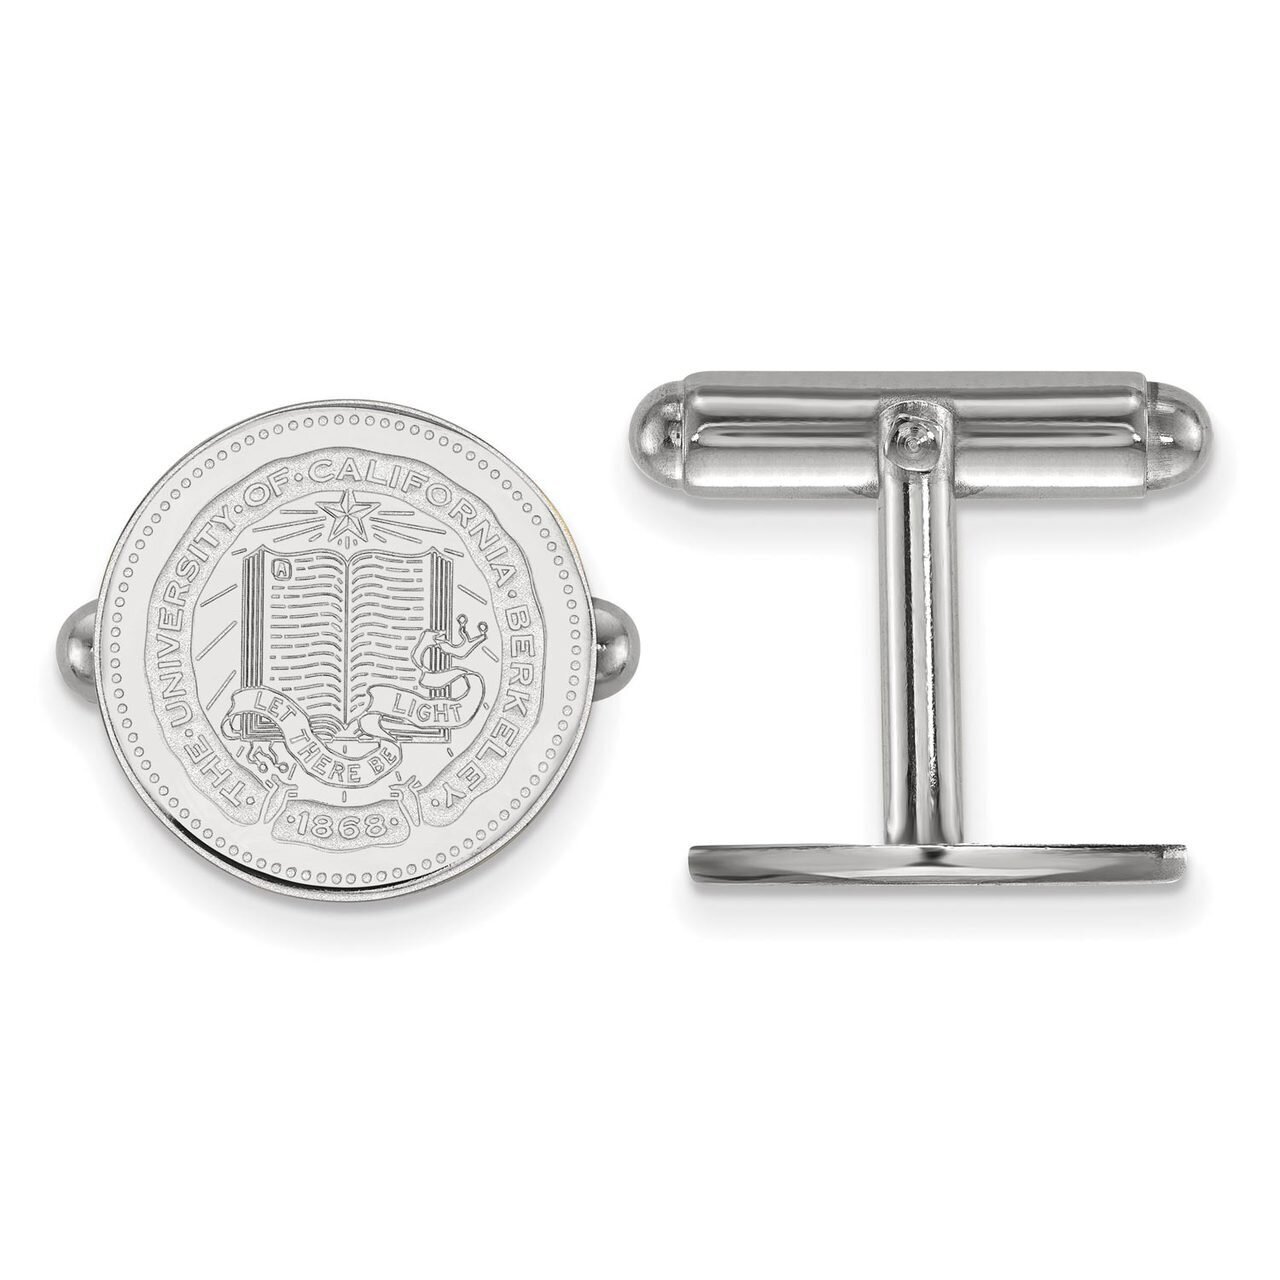 University of California Berkeley Crest Cuff Link Sterling Silver SS041UCB